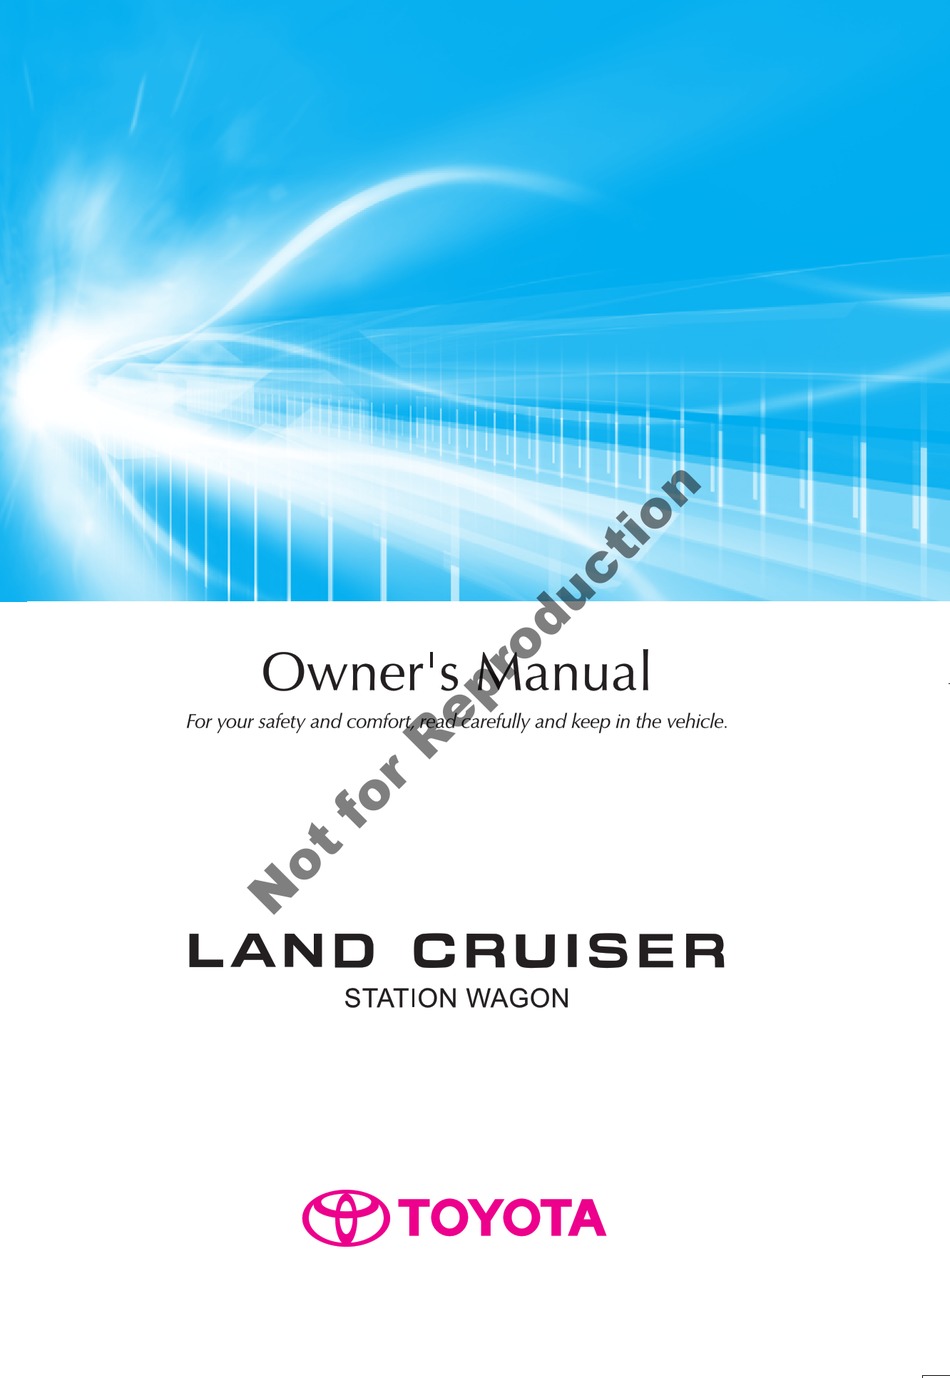 LAND CRUISER OWNERS MANUAL 1995 TOYOTA BOOK HANDBOOK 